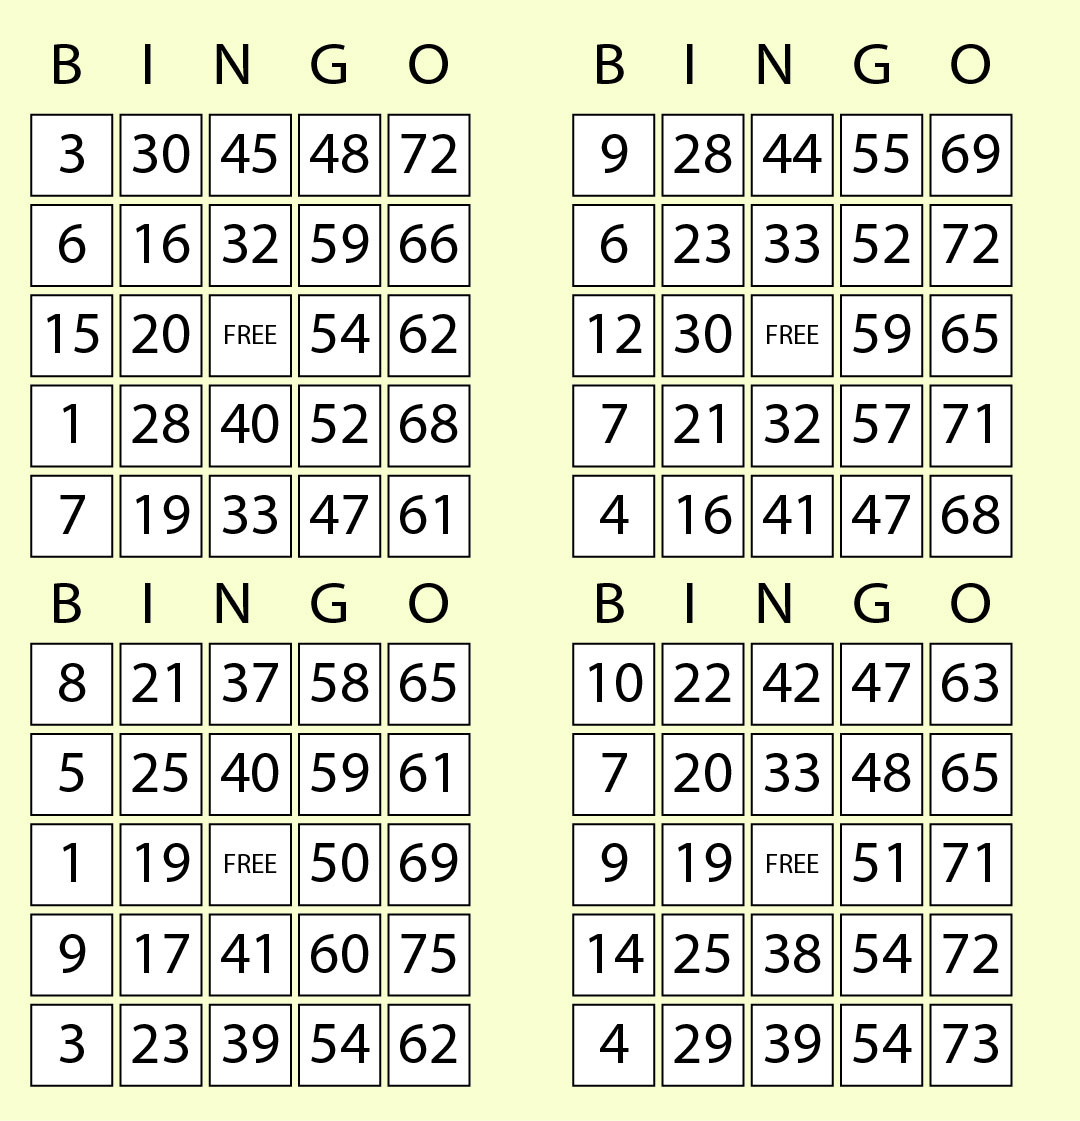 bingo-calling-sheet-printable